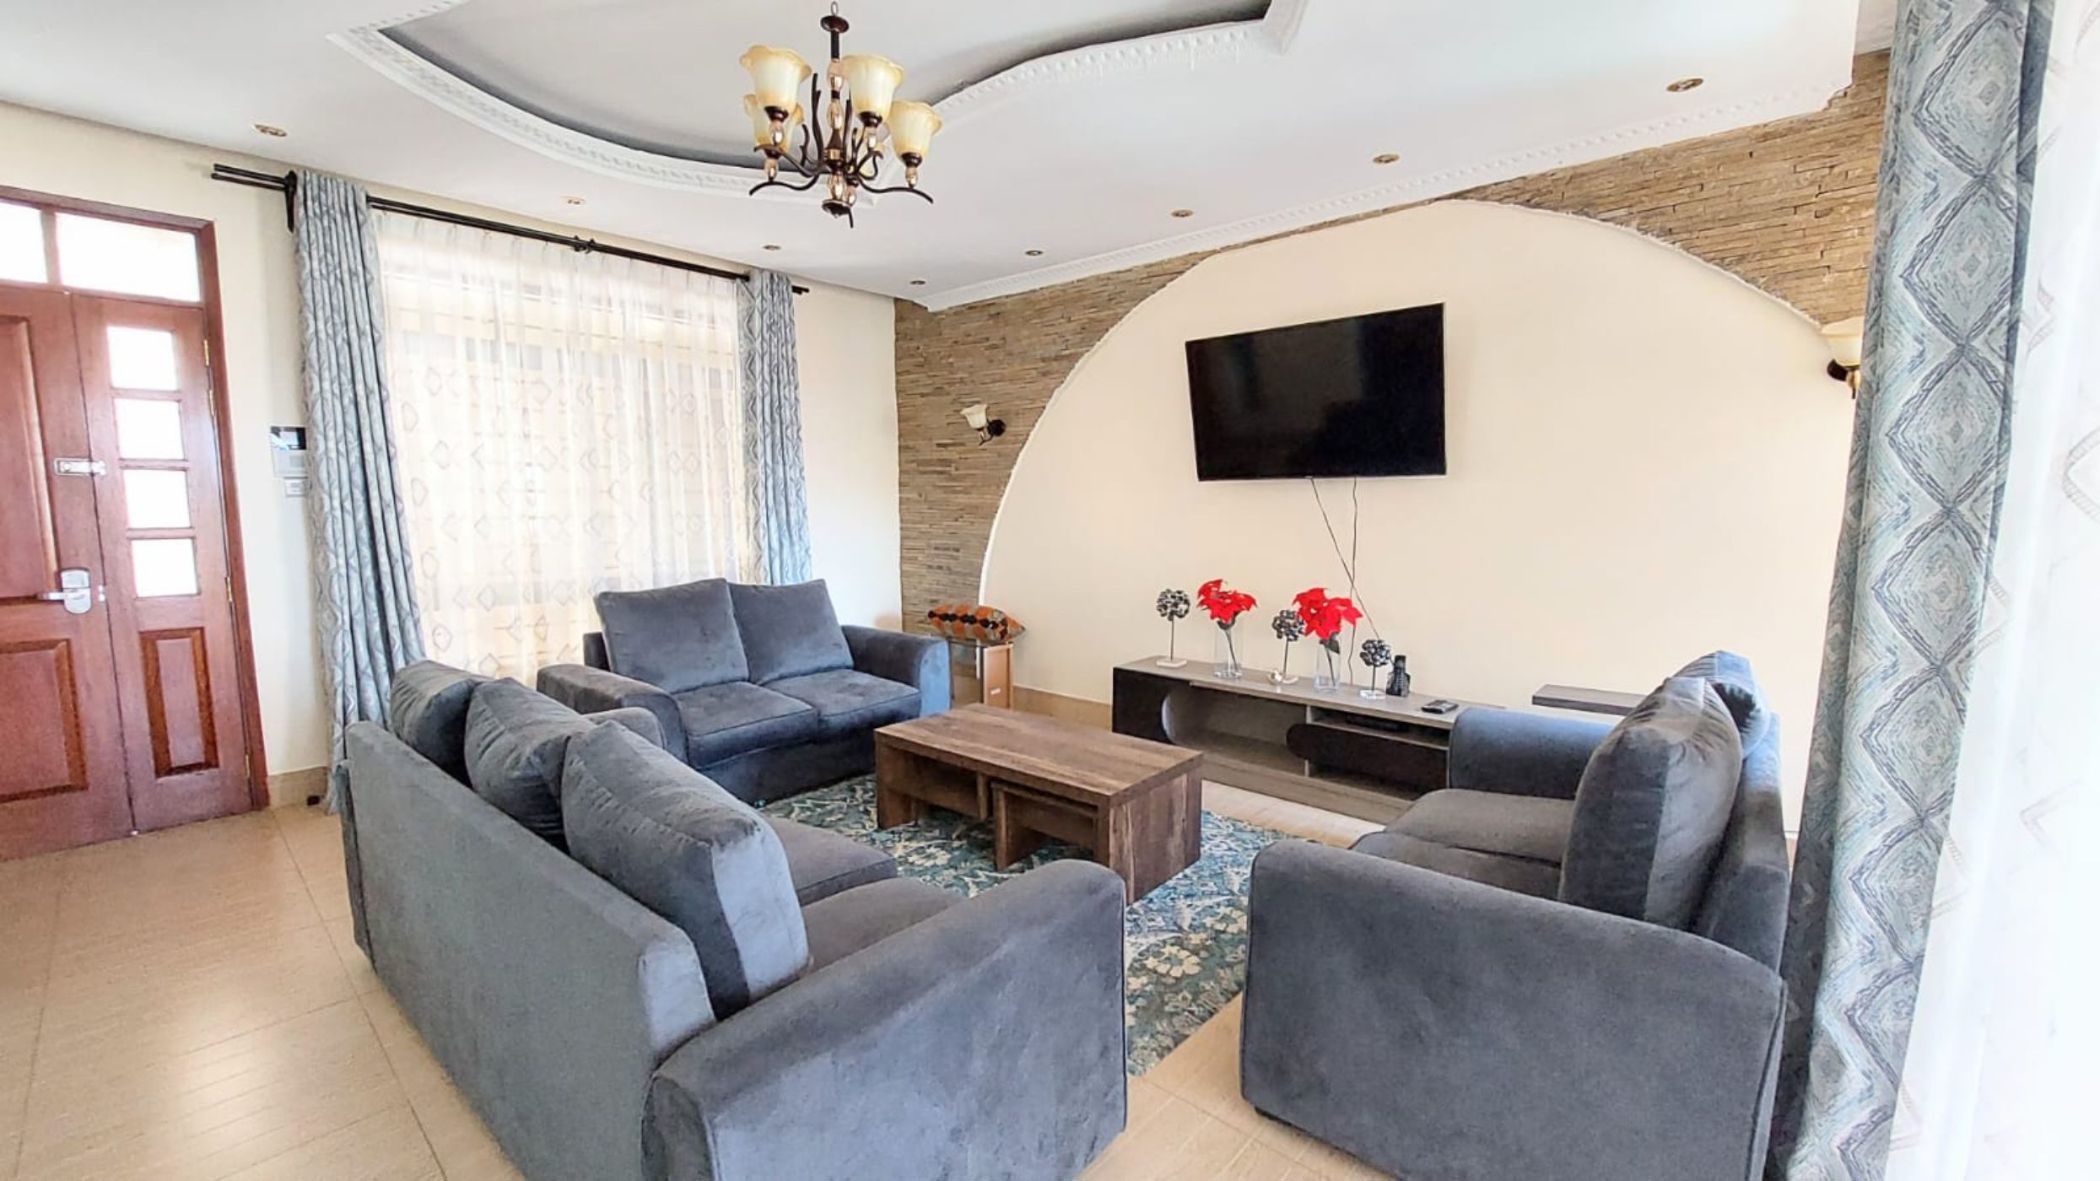 3 bedroom apartment to rent in Nairobi (Kenya)